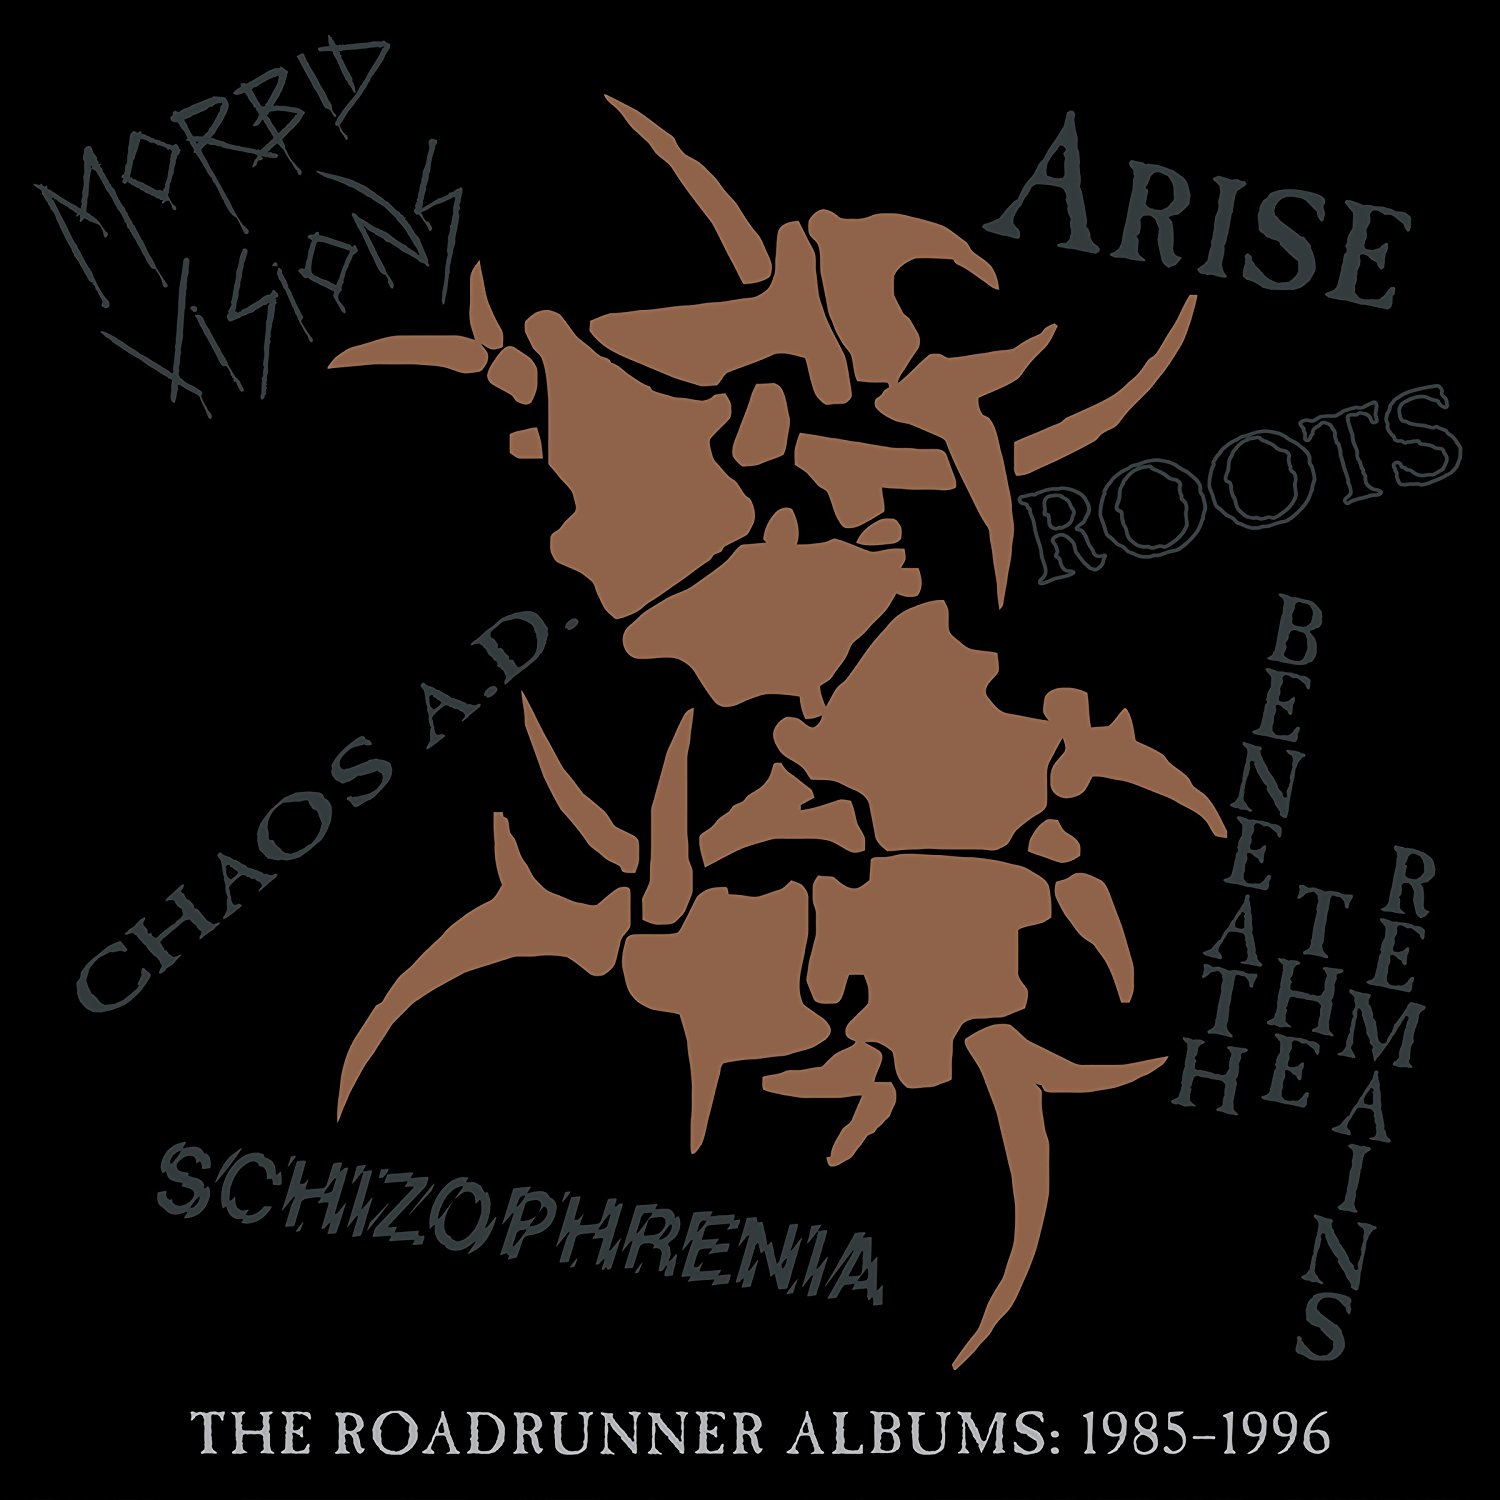 Sepultura - The Roadrunner Albums: 1985-1996 (2017) Album Info